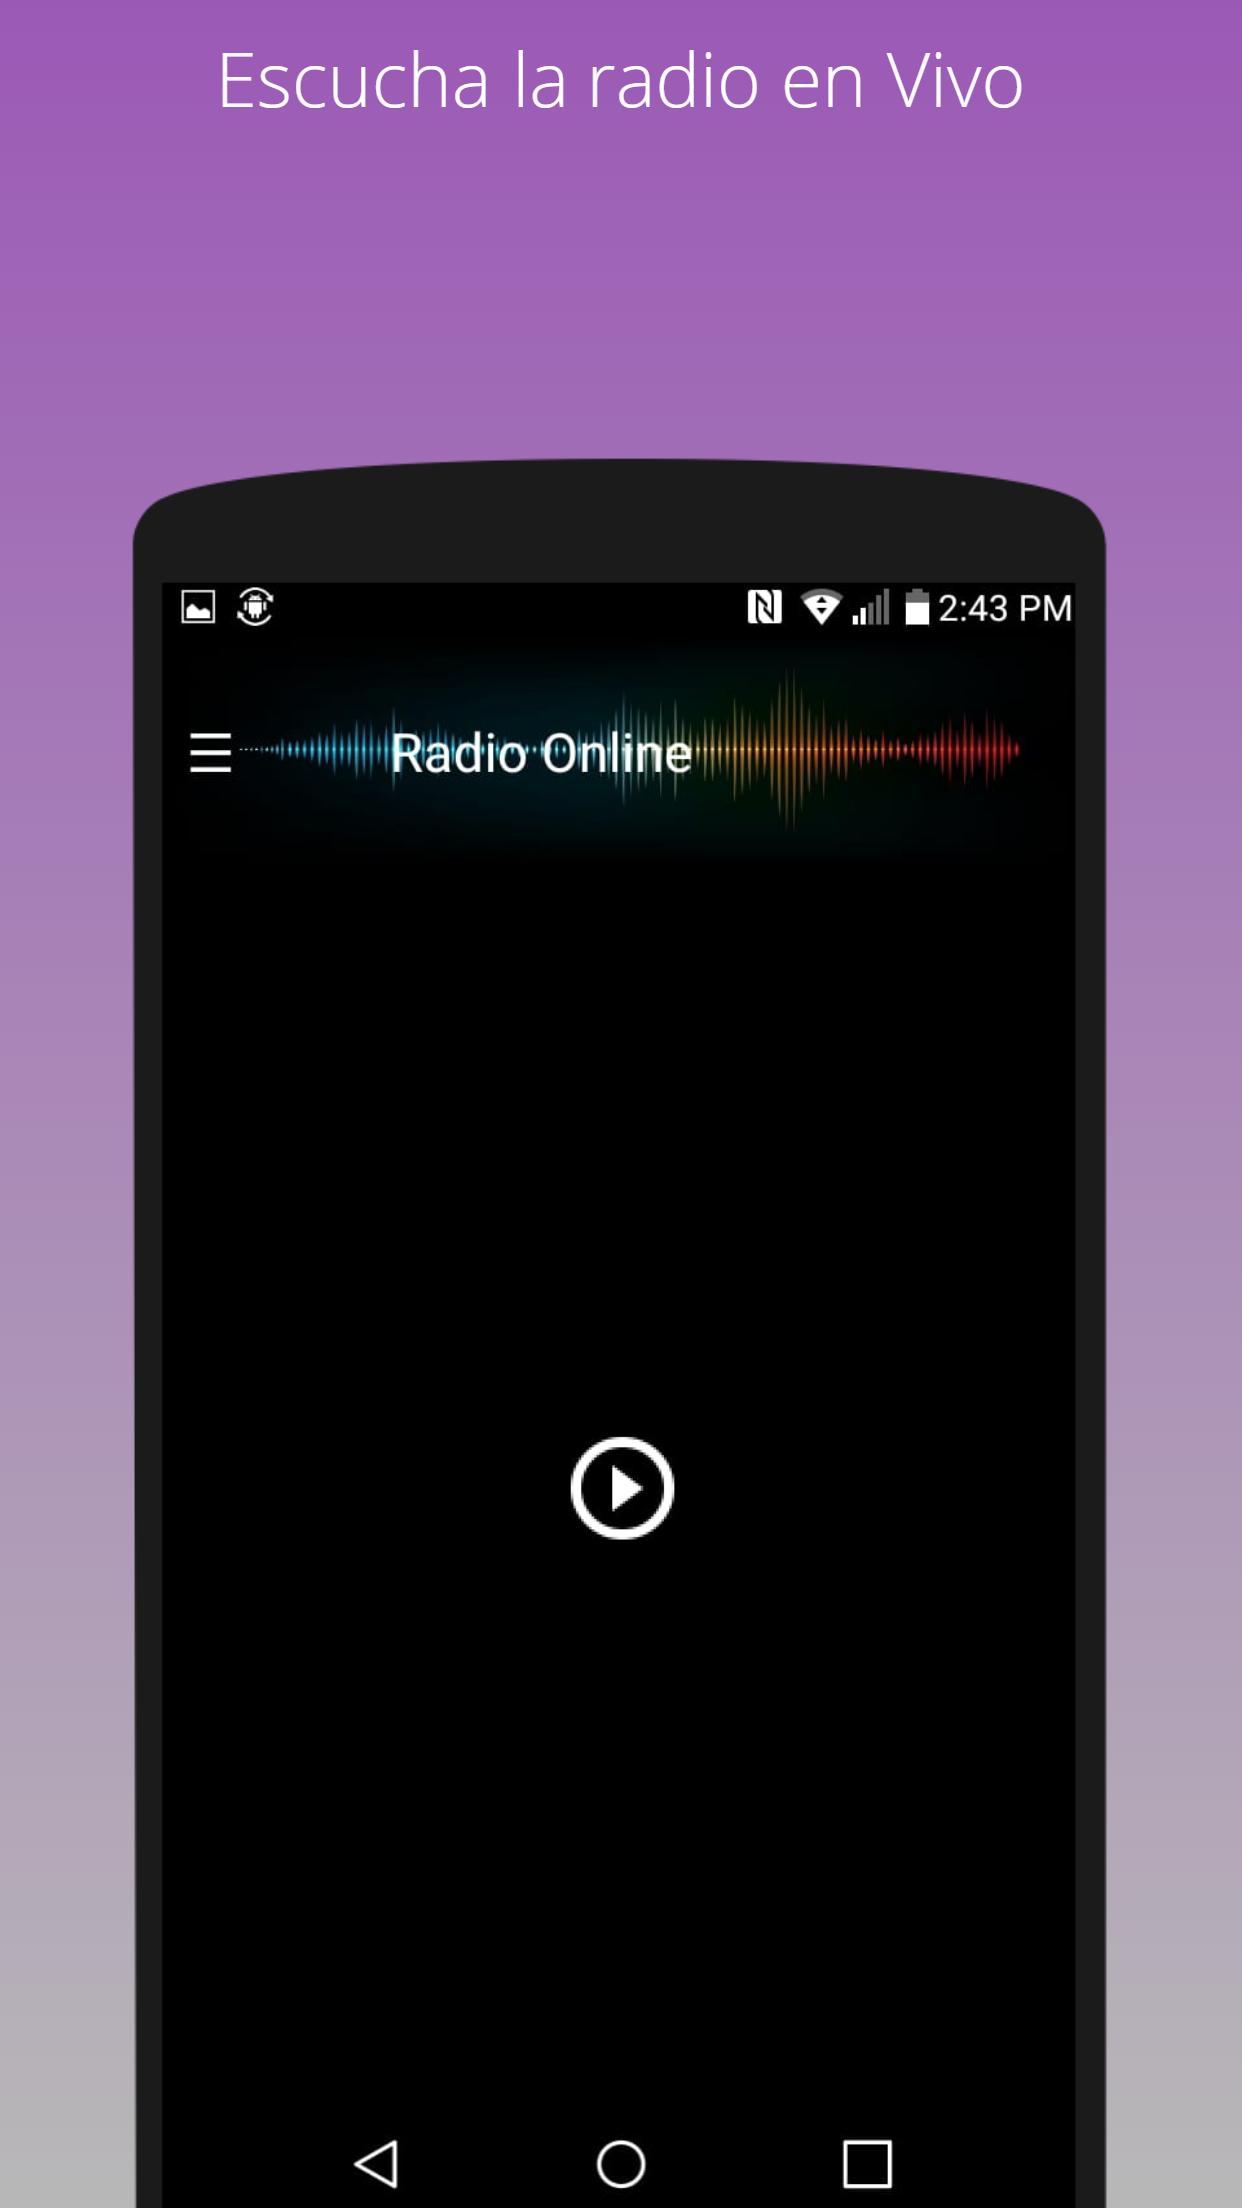 Radio Exa 96.9 FM en vivo Emisora dominicana APK pour Android Télécharger